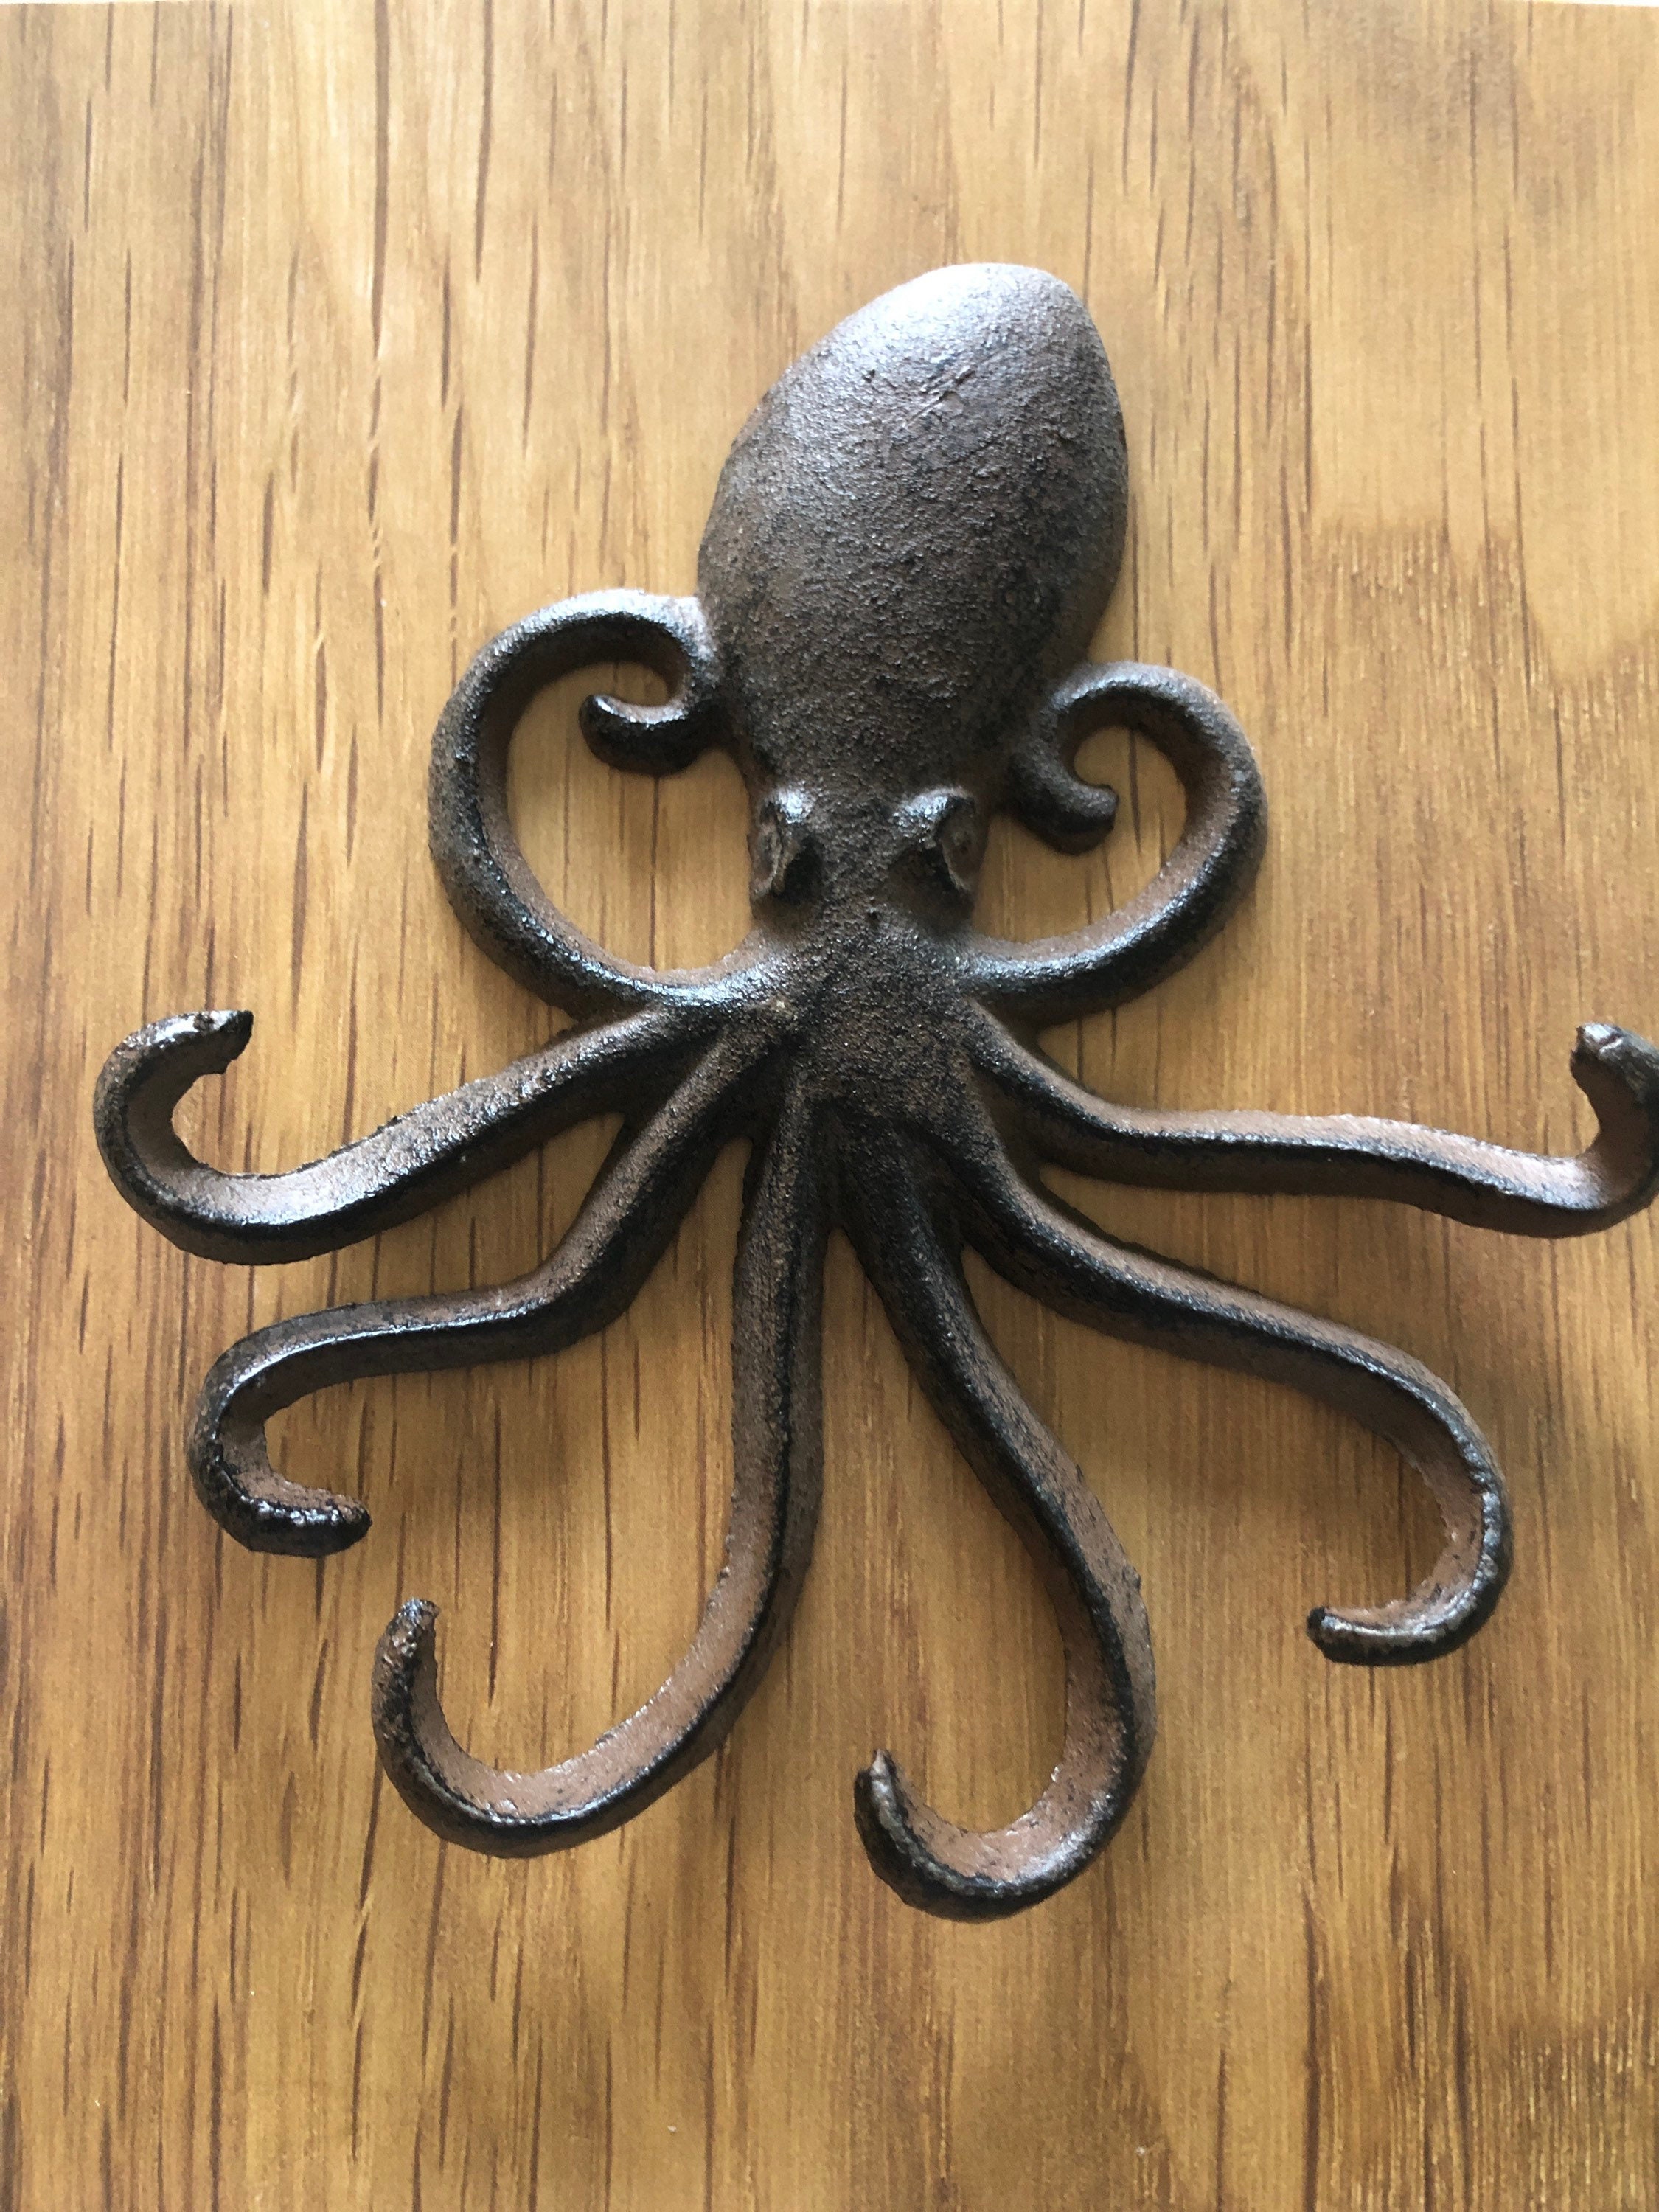 Sumnacon Decorative Cast Iron Octopus 6 Tentacles Wall Hook - Wall Mounted  Keys Hook Coat Rack Towels Holder Copper